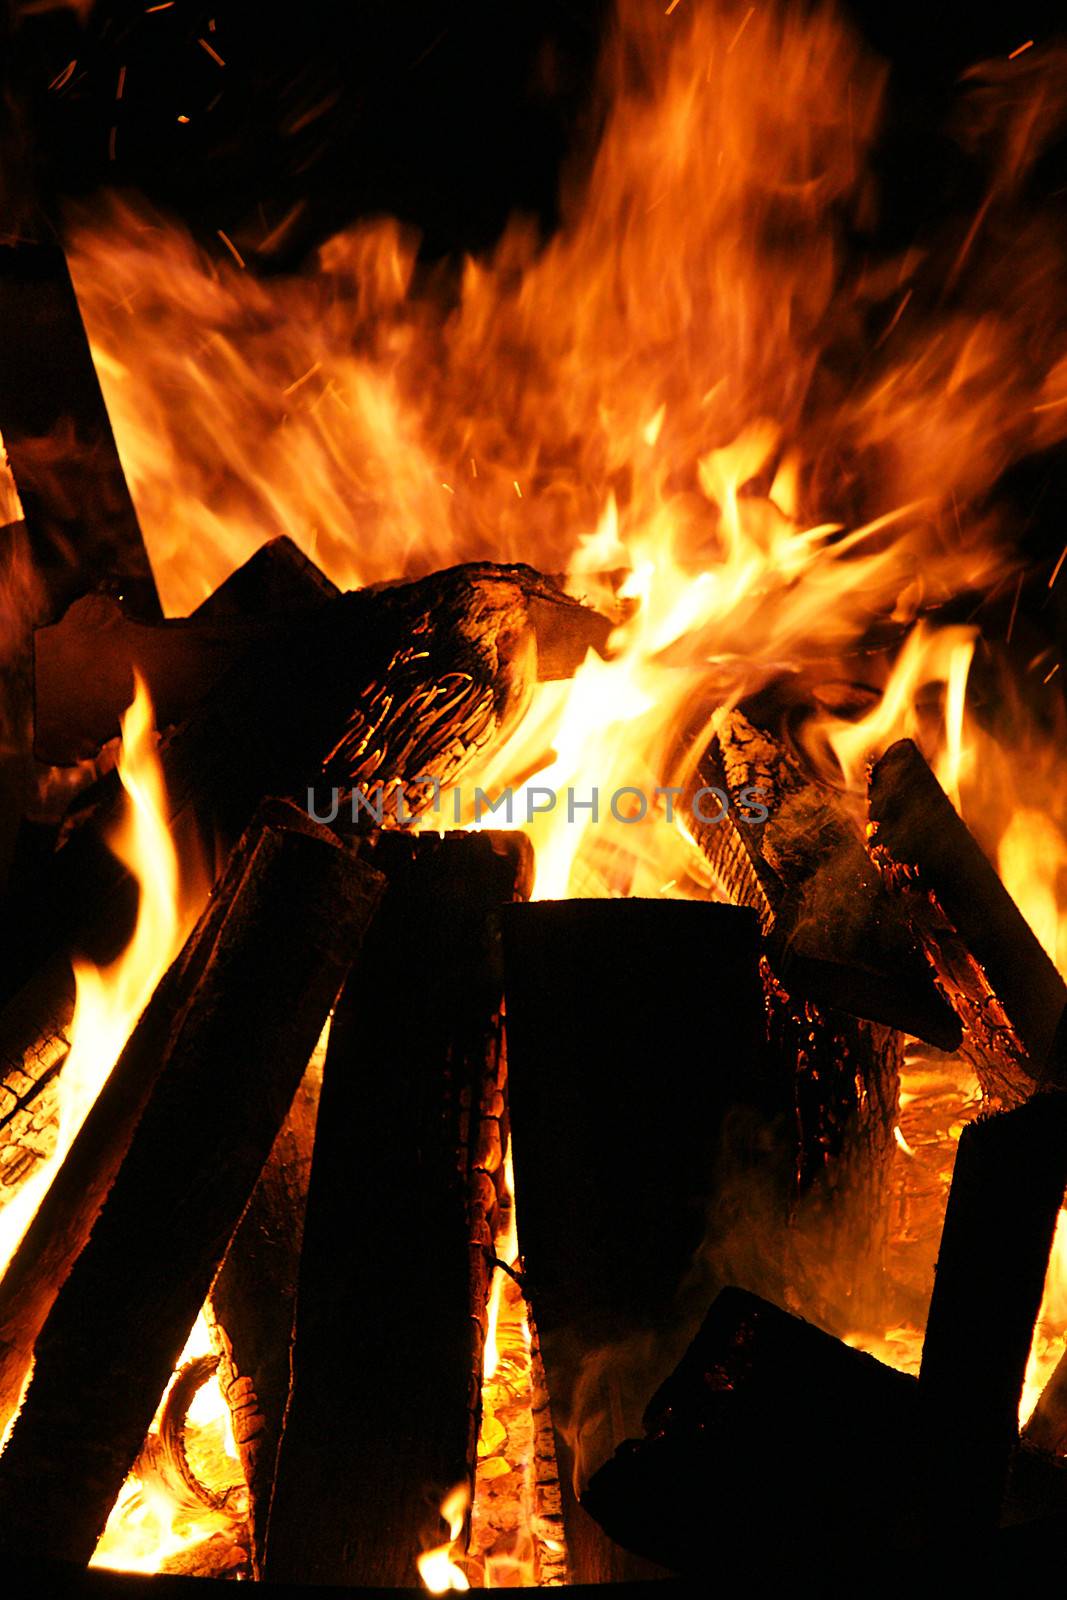 Bonfire with burning wood logs